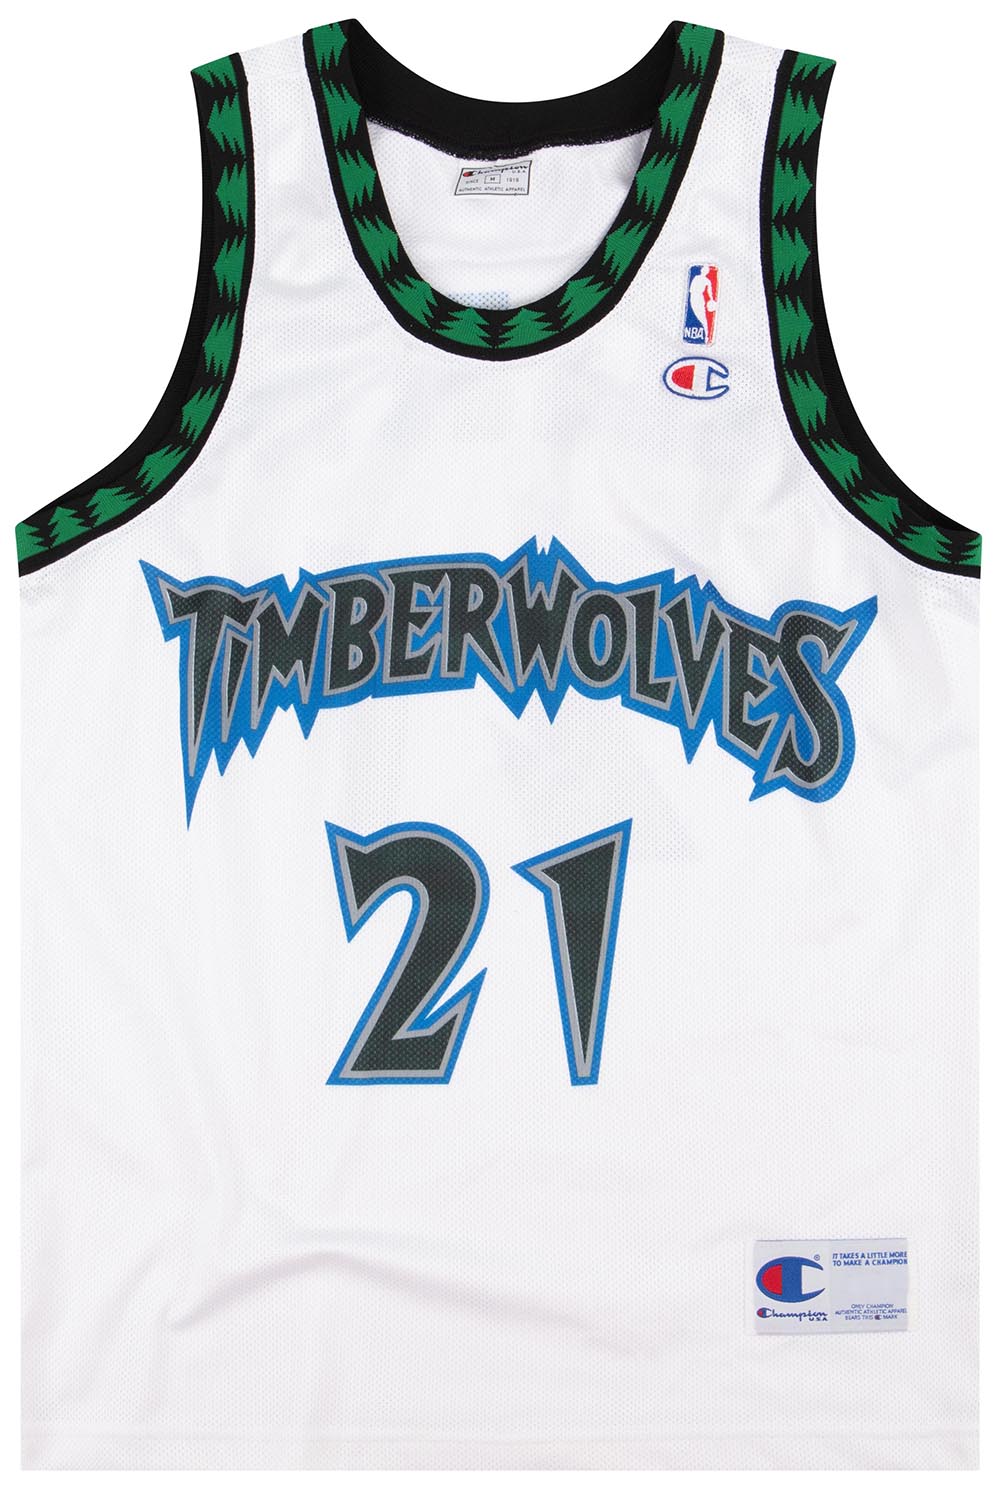 Kevin Garnett 21 Minnesota Timberwolves Wolves Champion size 44 Large Jersey